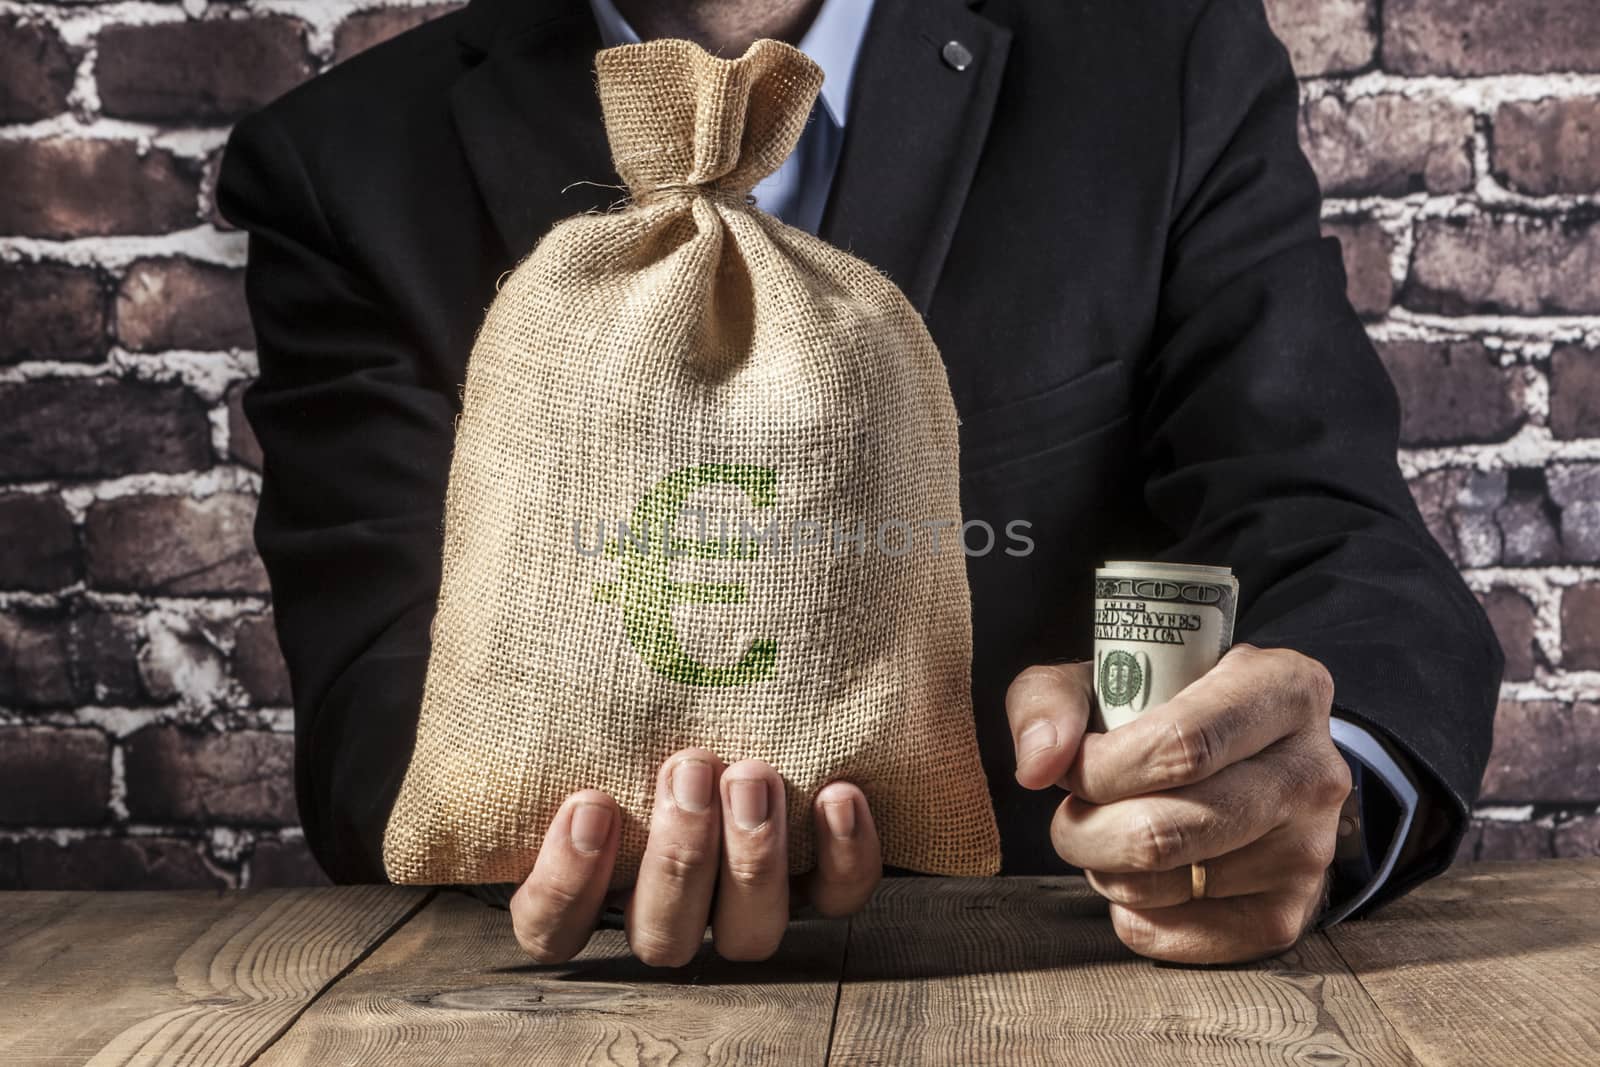 Man holding a big sack of money